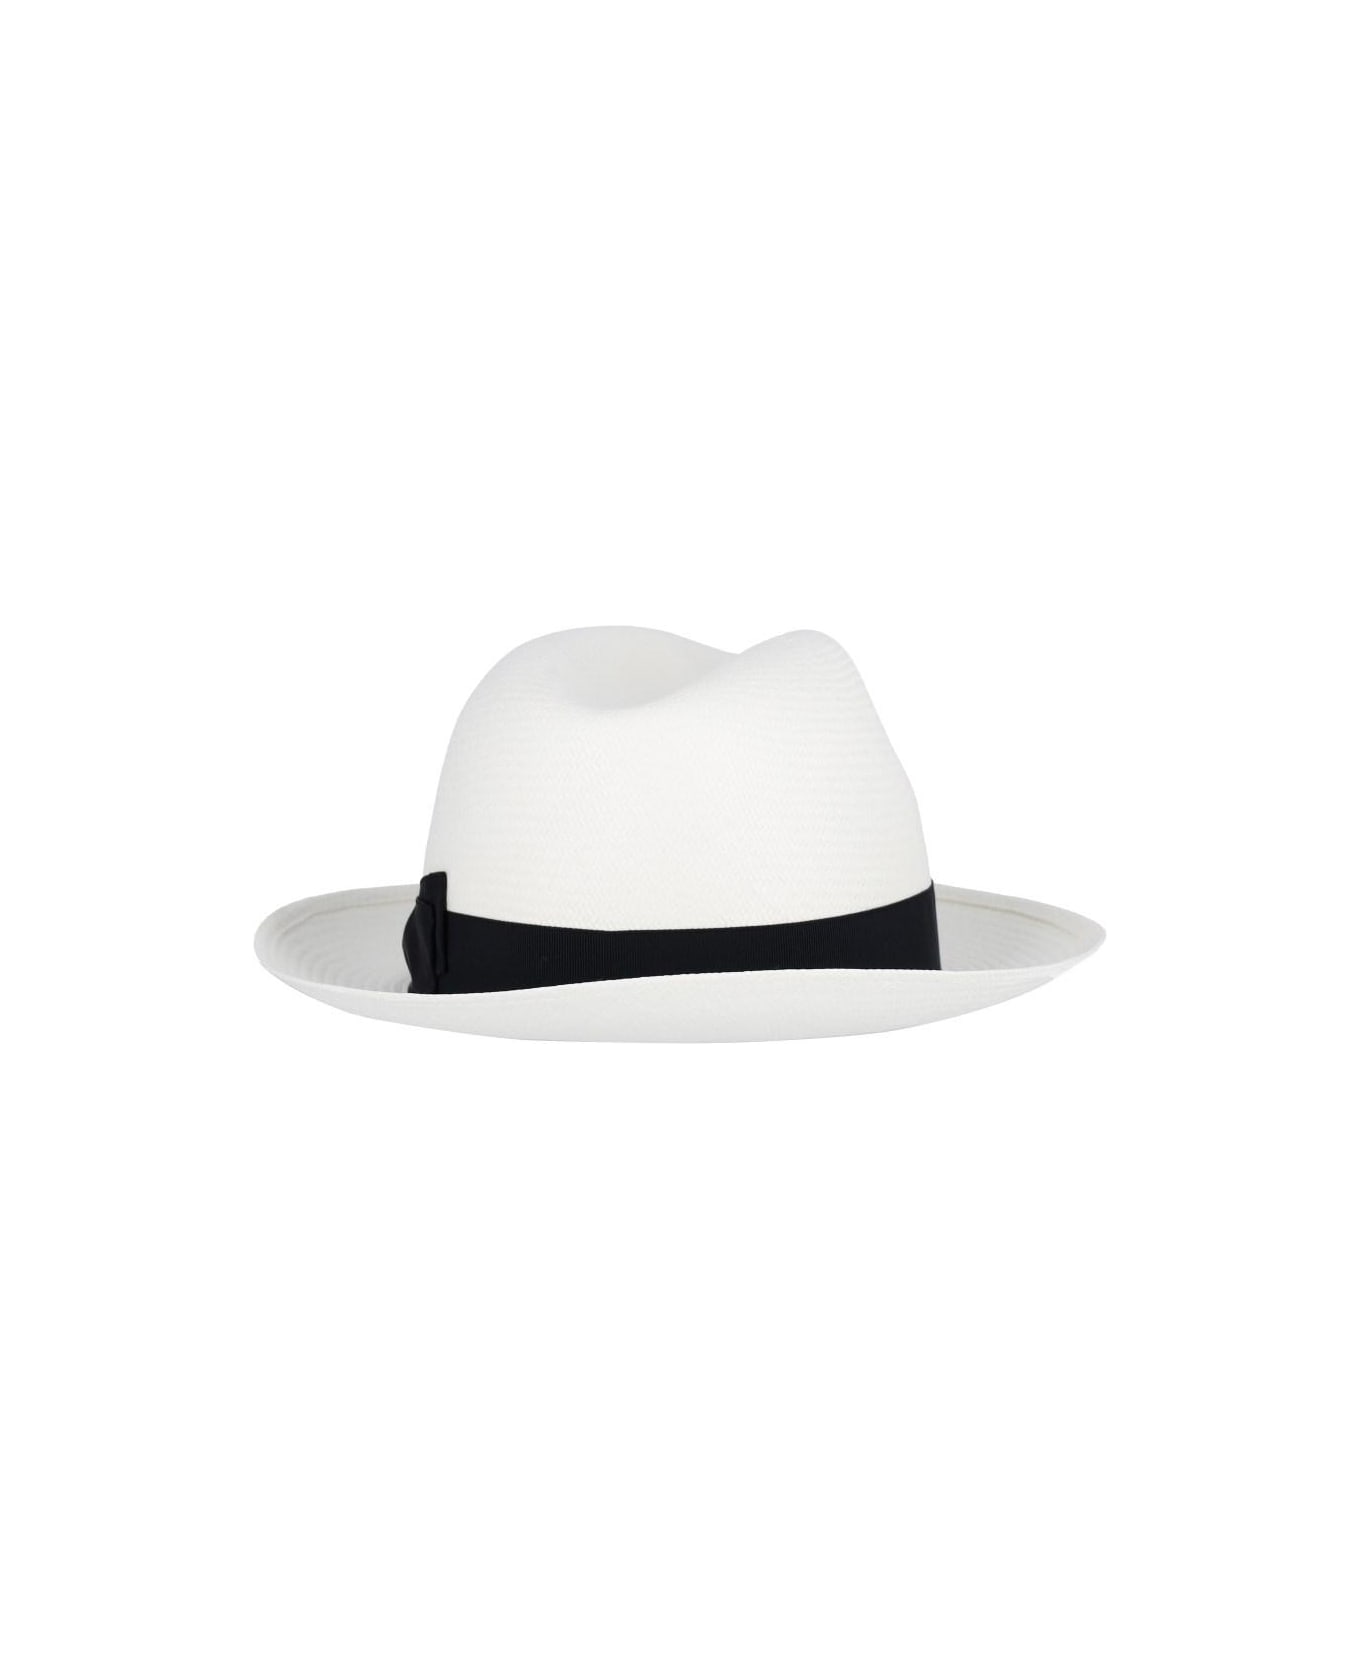 Borsalino Straw Hat 'panama' Borsalino - NATURAL 帽子